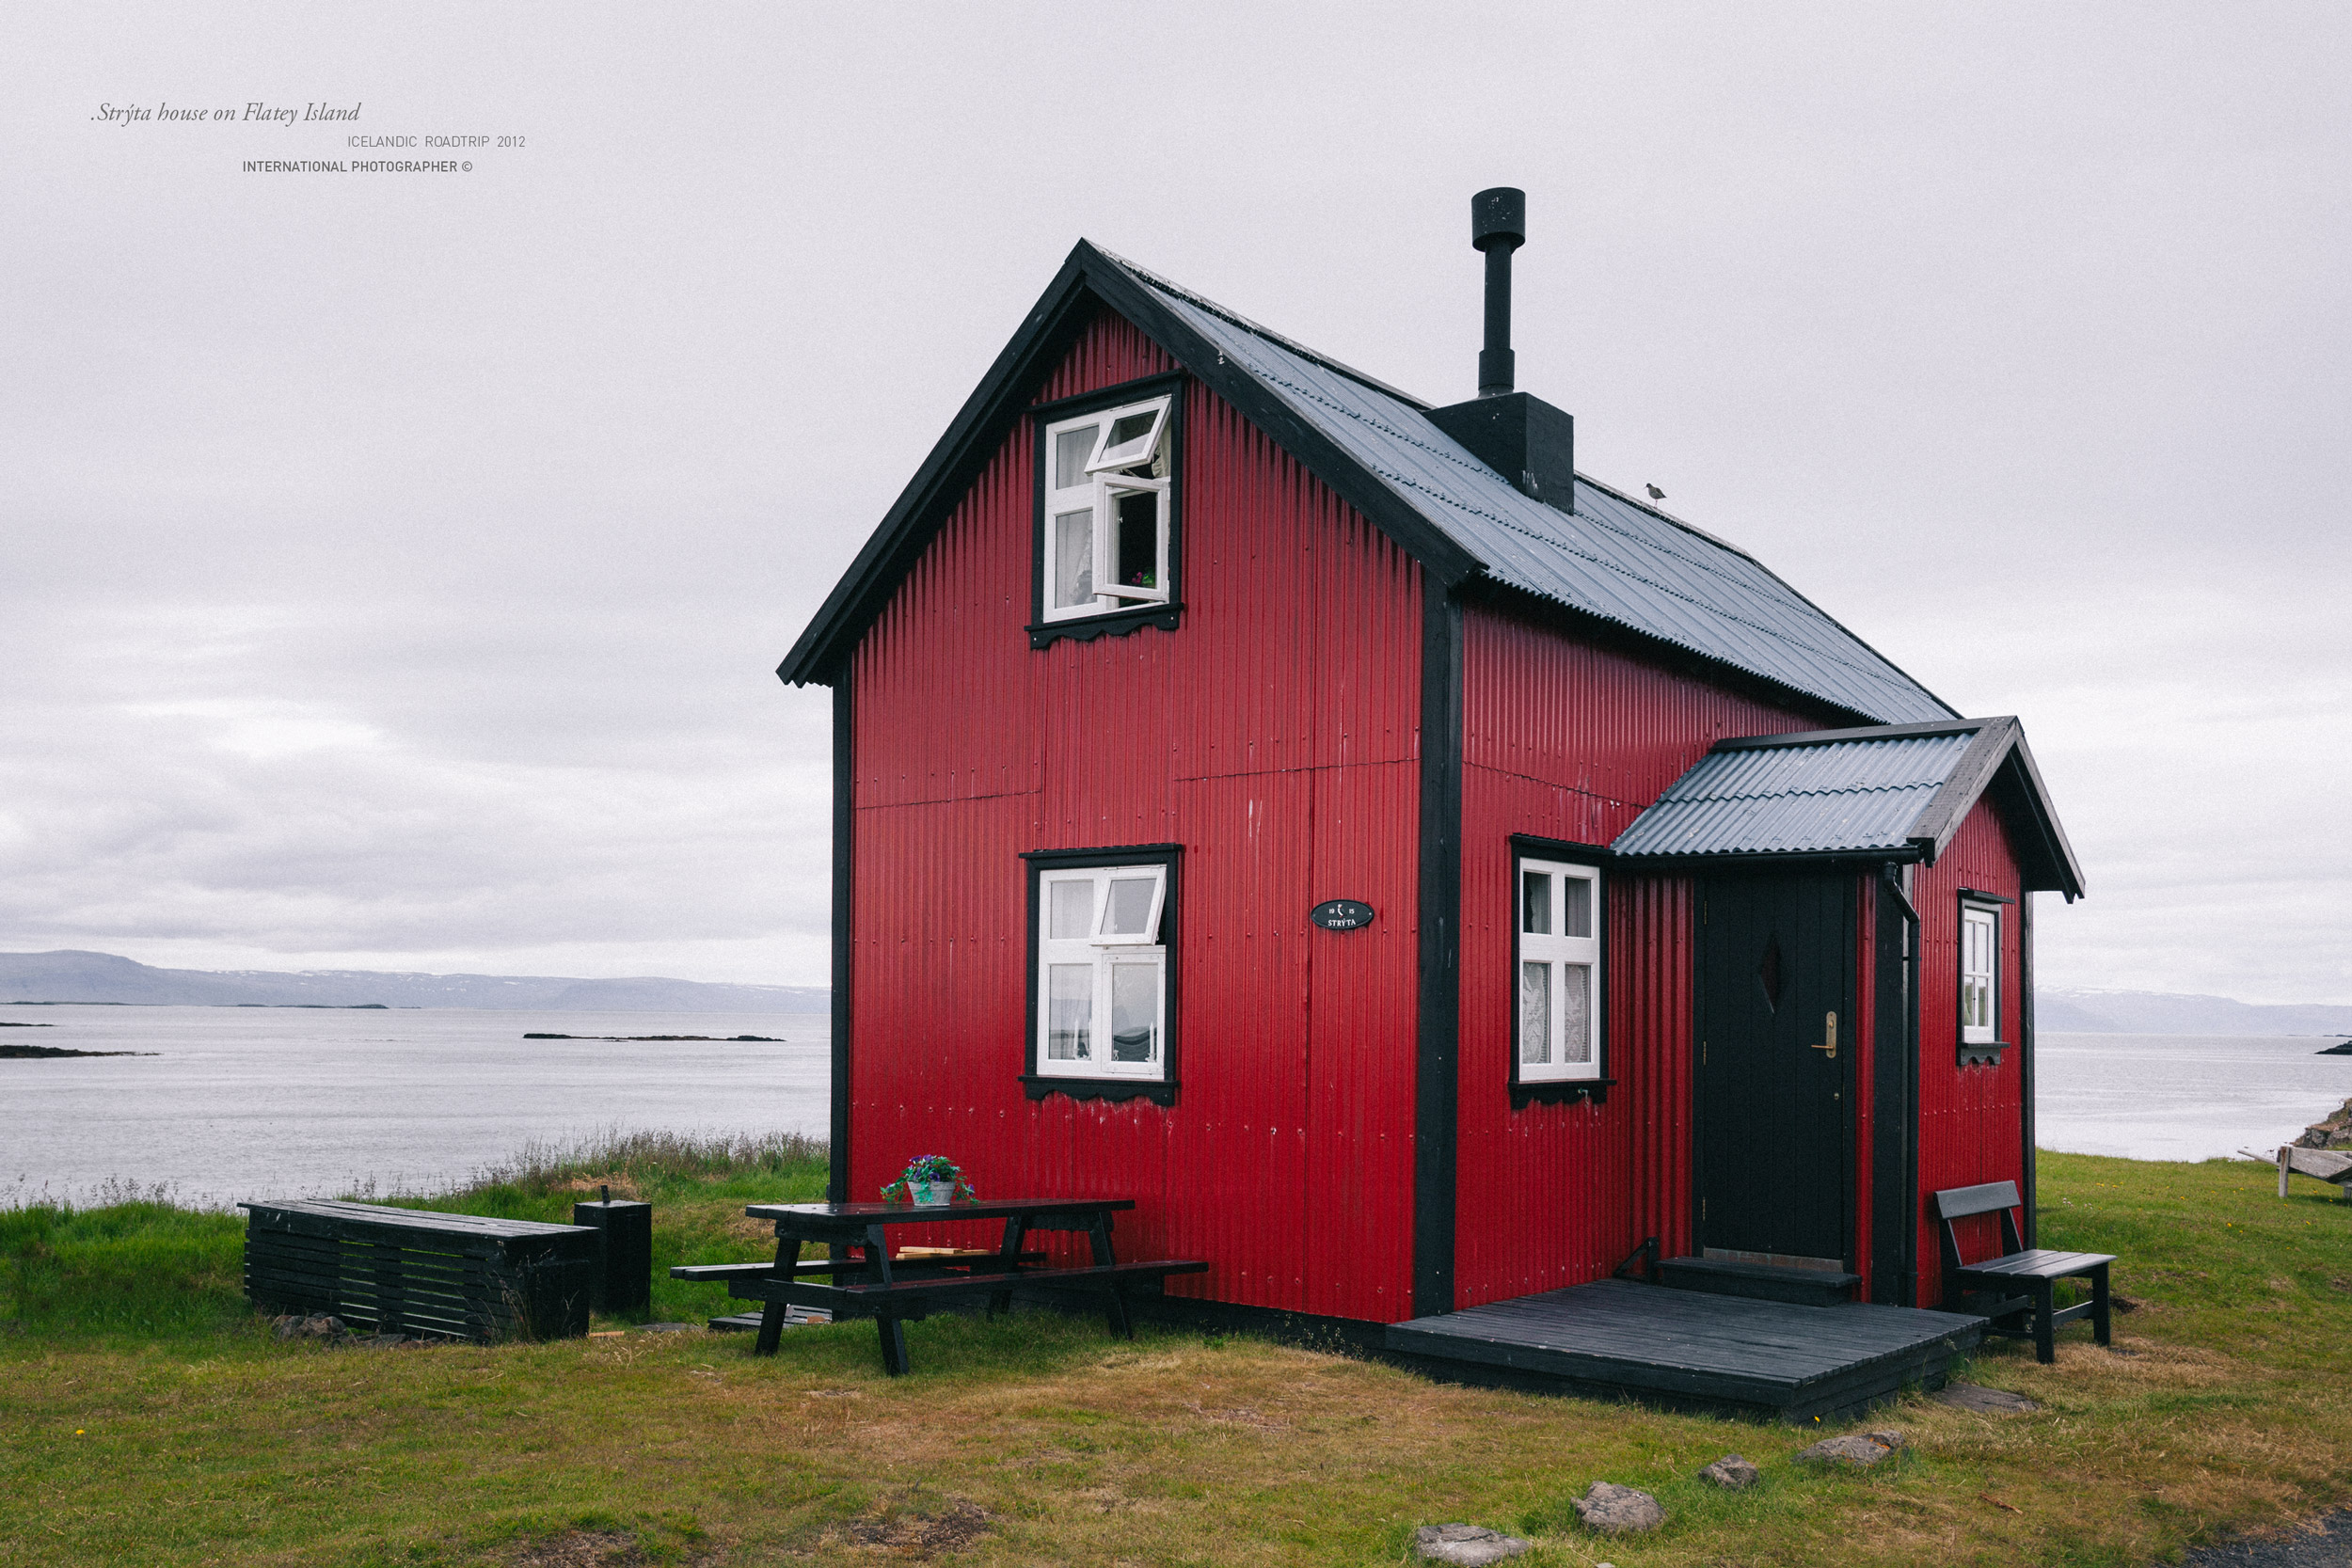 2012 ICELAND Stryta house Flatey Island 2